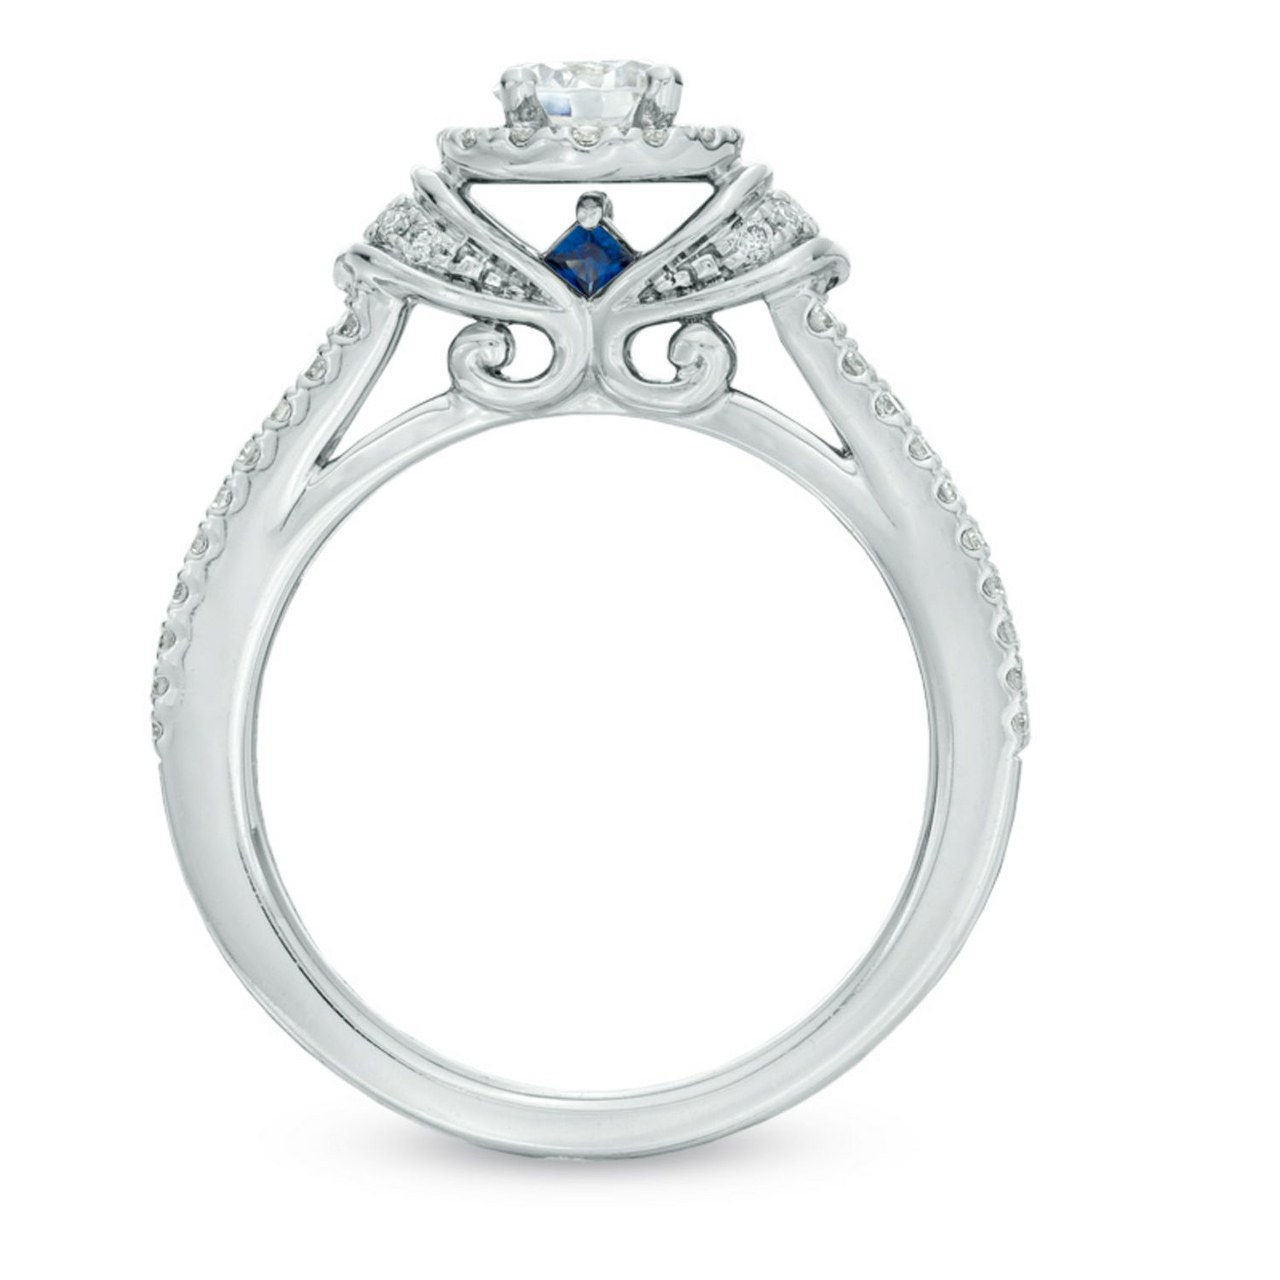 EIN sapphire engagement rings 1026 courtesy vera wang love